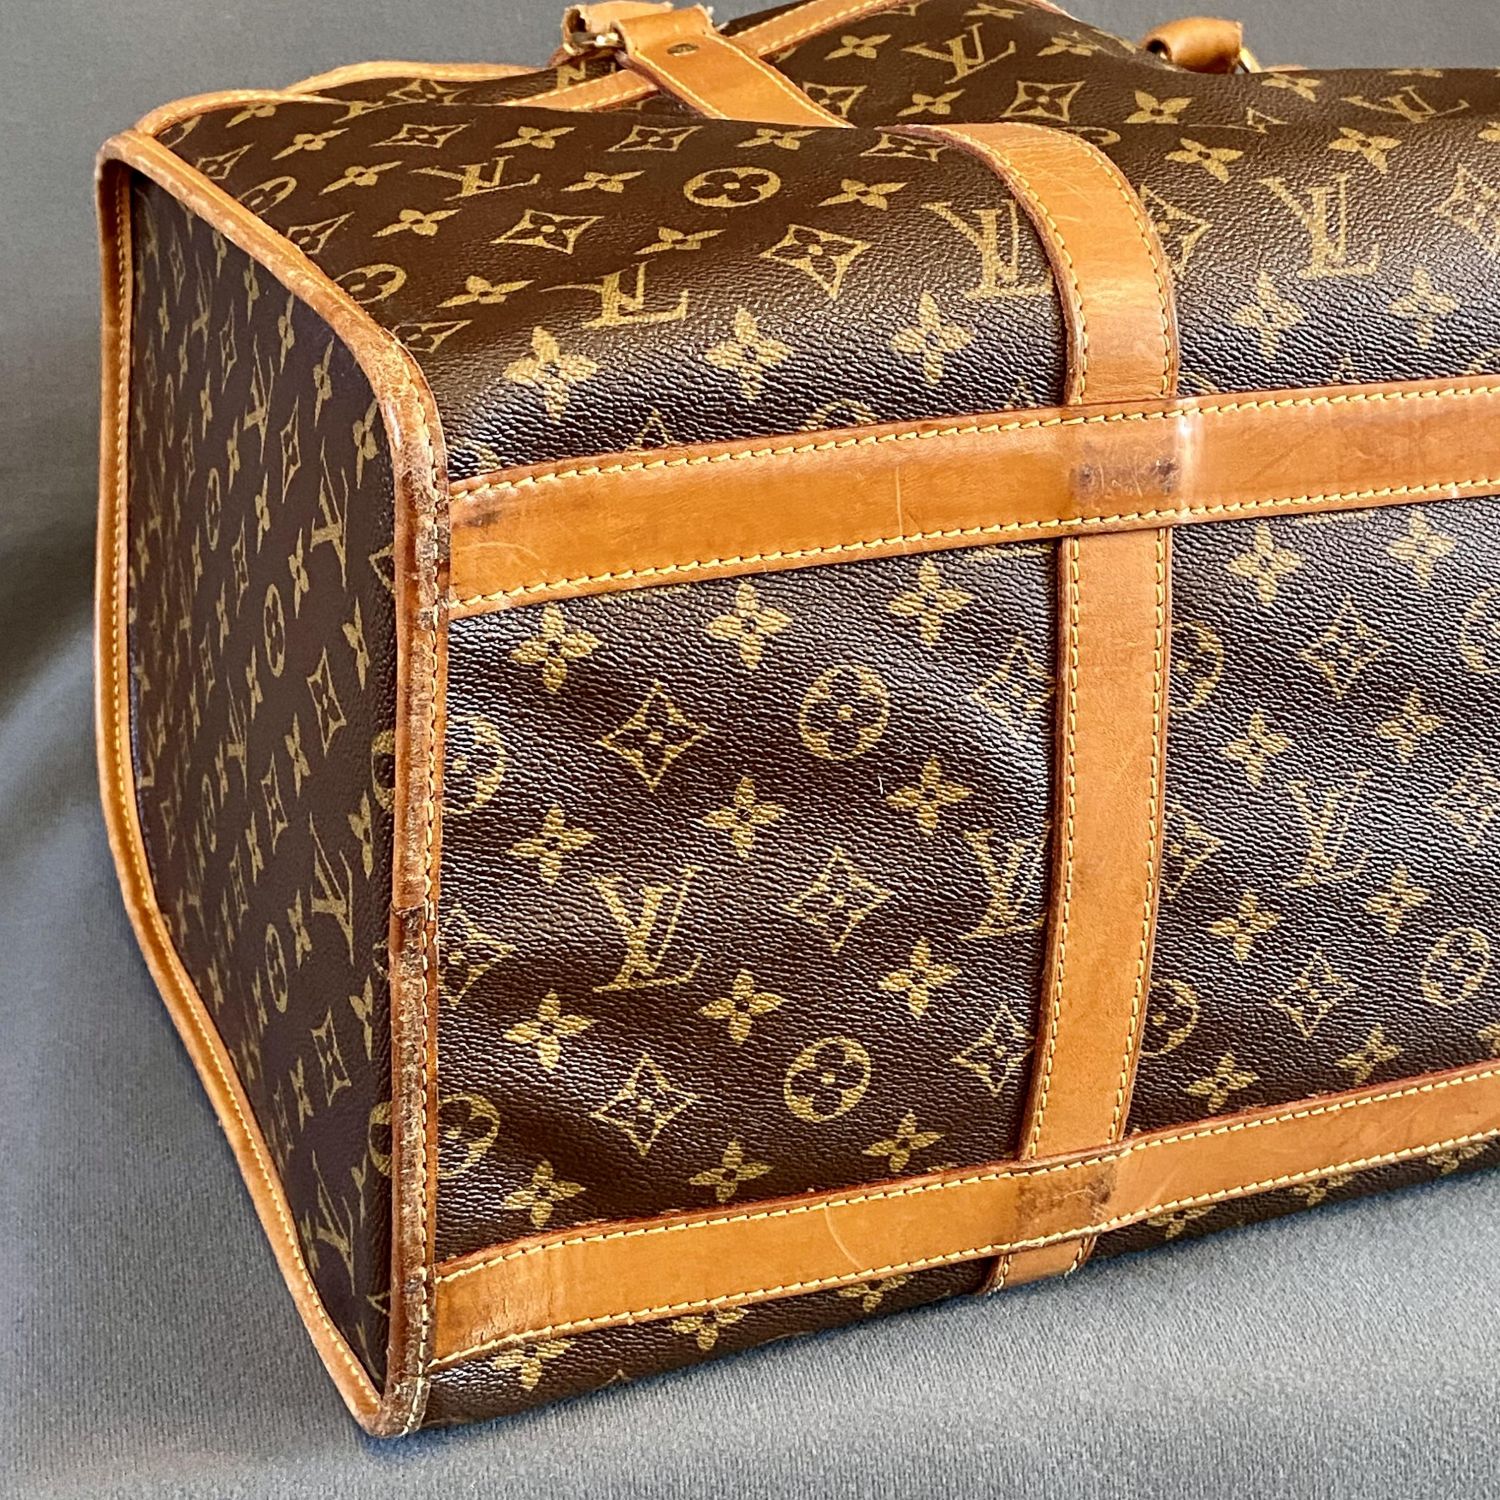 Louis Vuitton Dog Carrier 50 Hand Bag - Farfetch